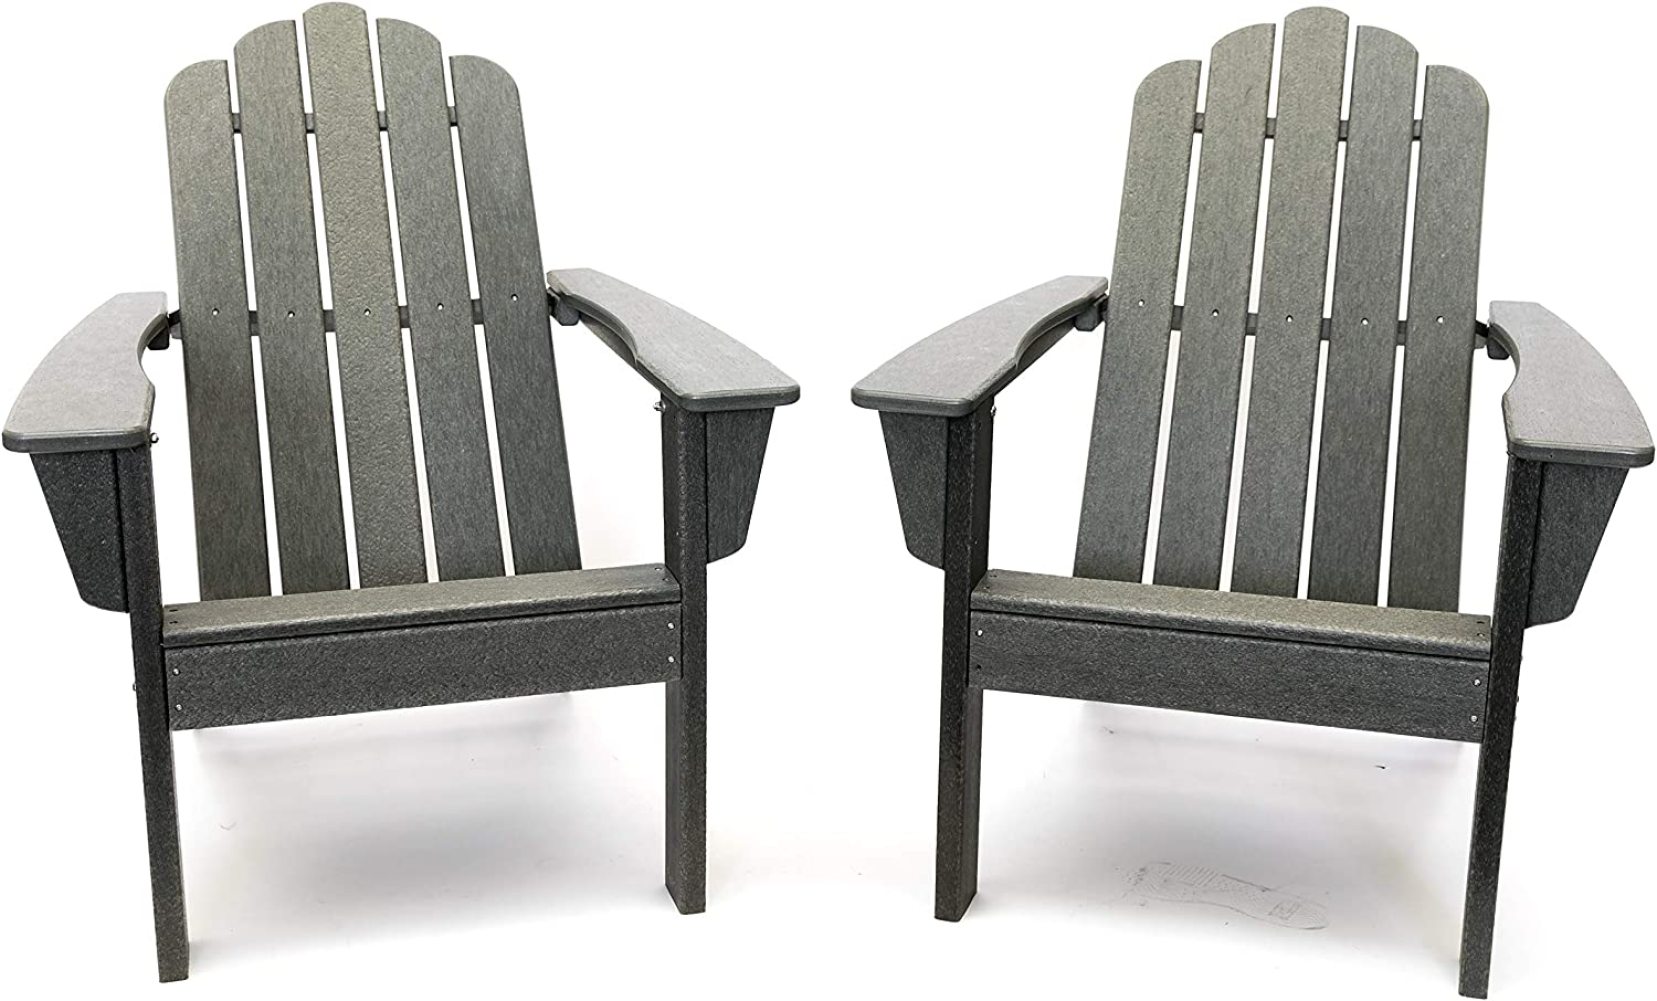 RovKeav LUX-1519-GRY2 Marina Adirondack Chair, 2-Pack, Gray - image 4 of 8